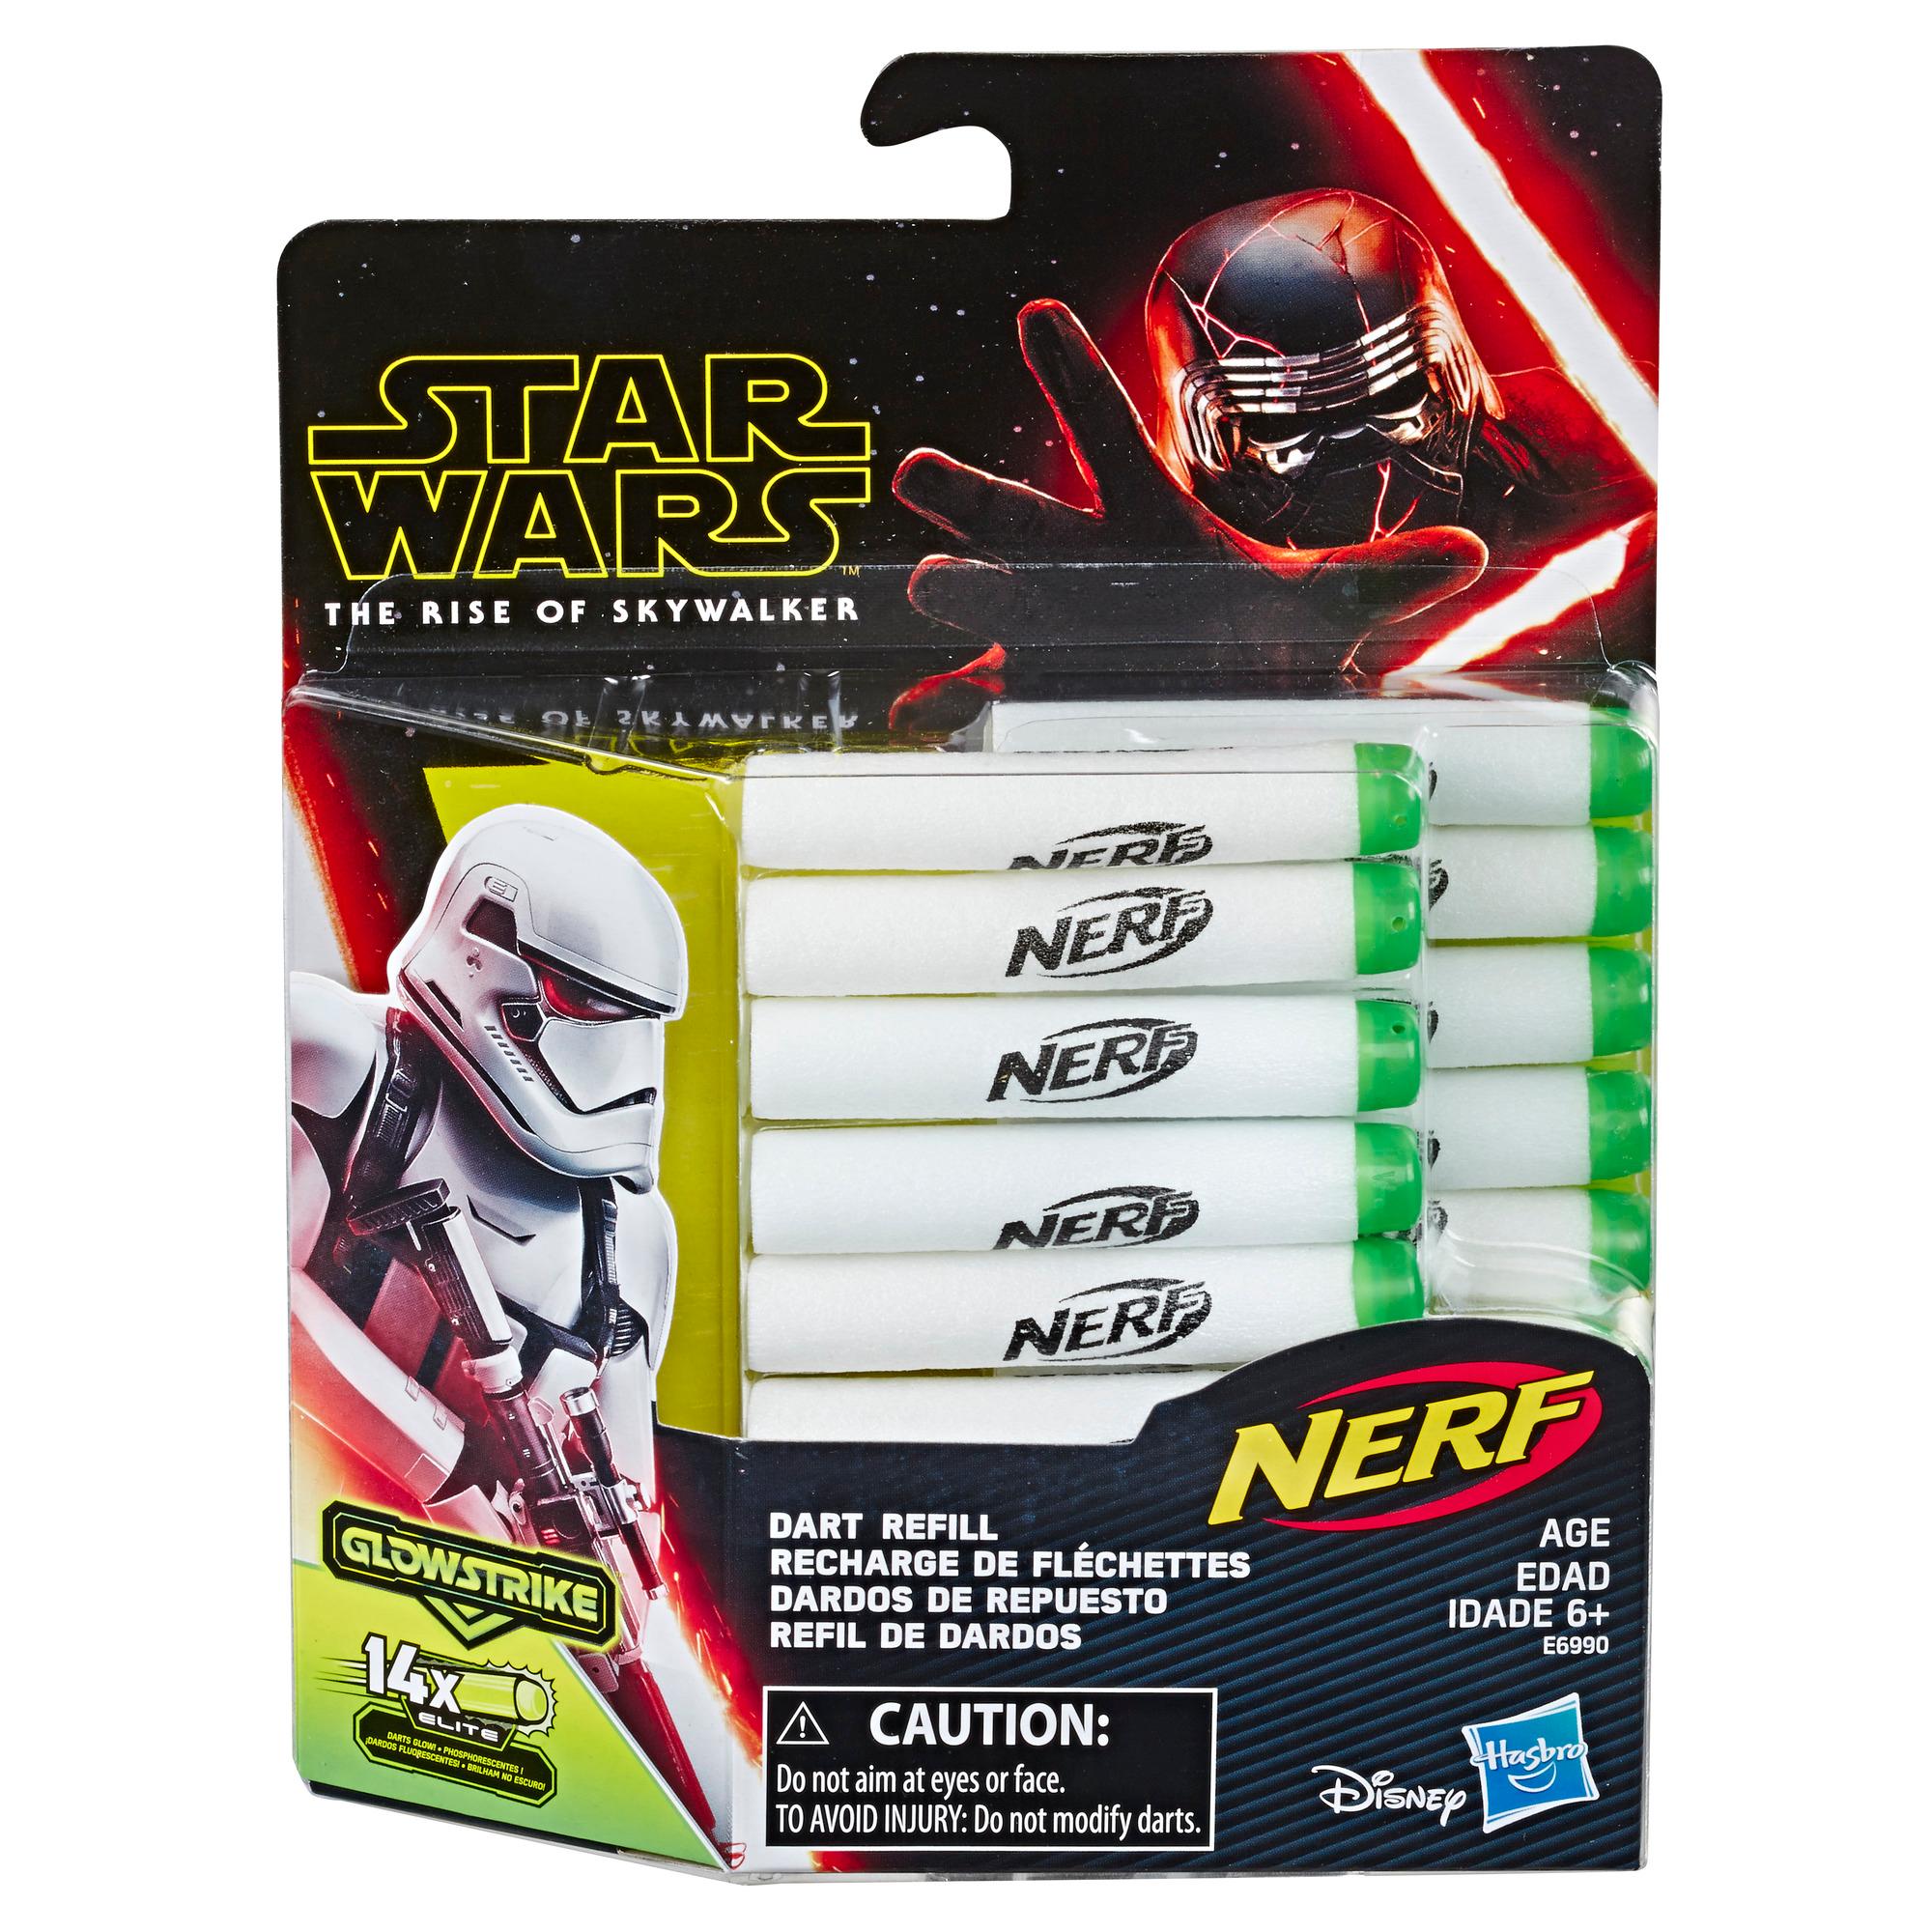 Star Wars Nerf Glowstrike Refill 14-pack Rogue One Darts Hasbro 7egbza1 B7865 for sale online 